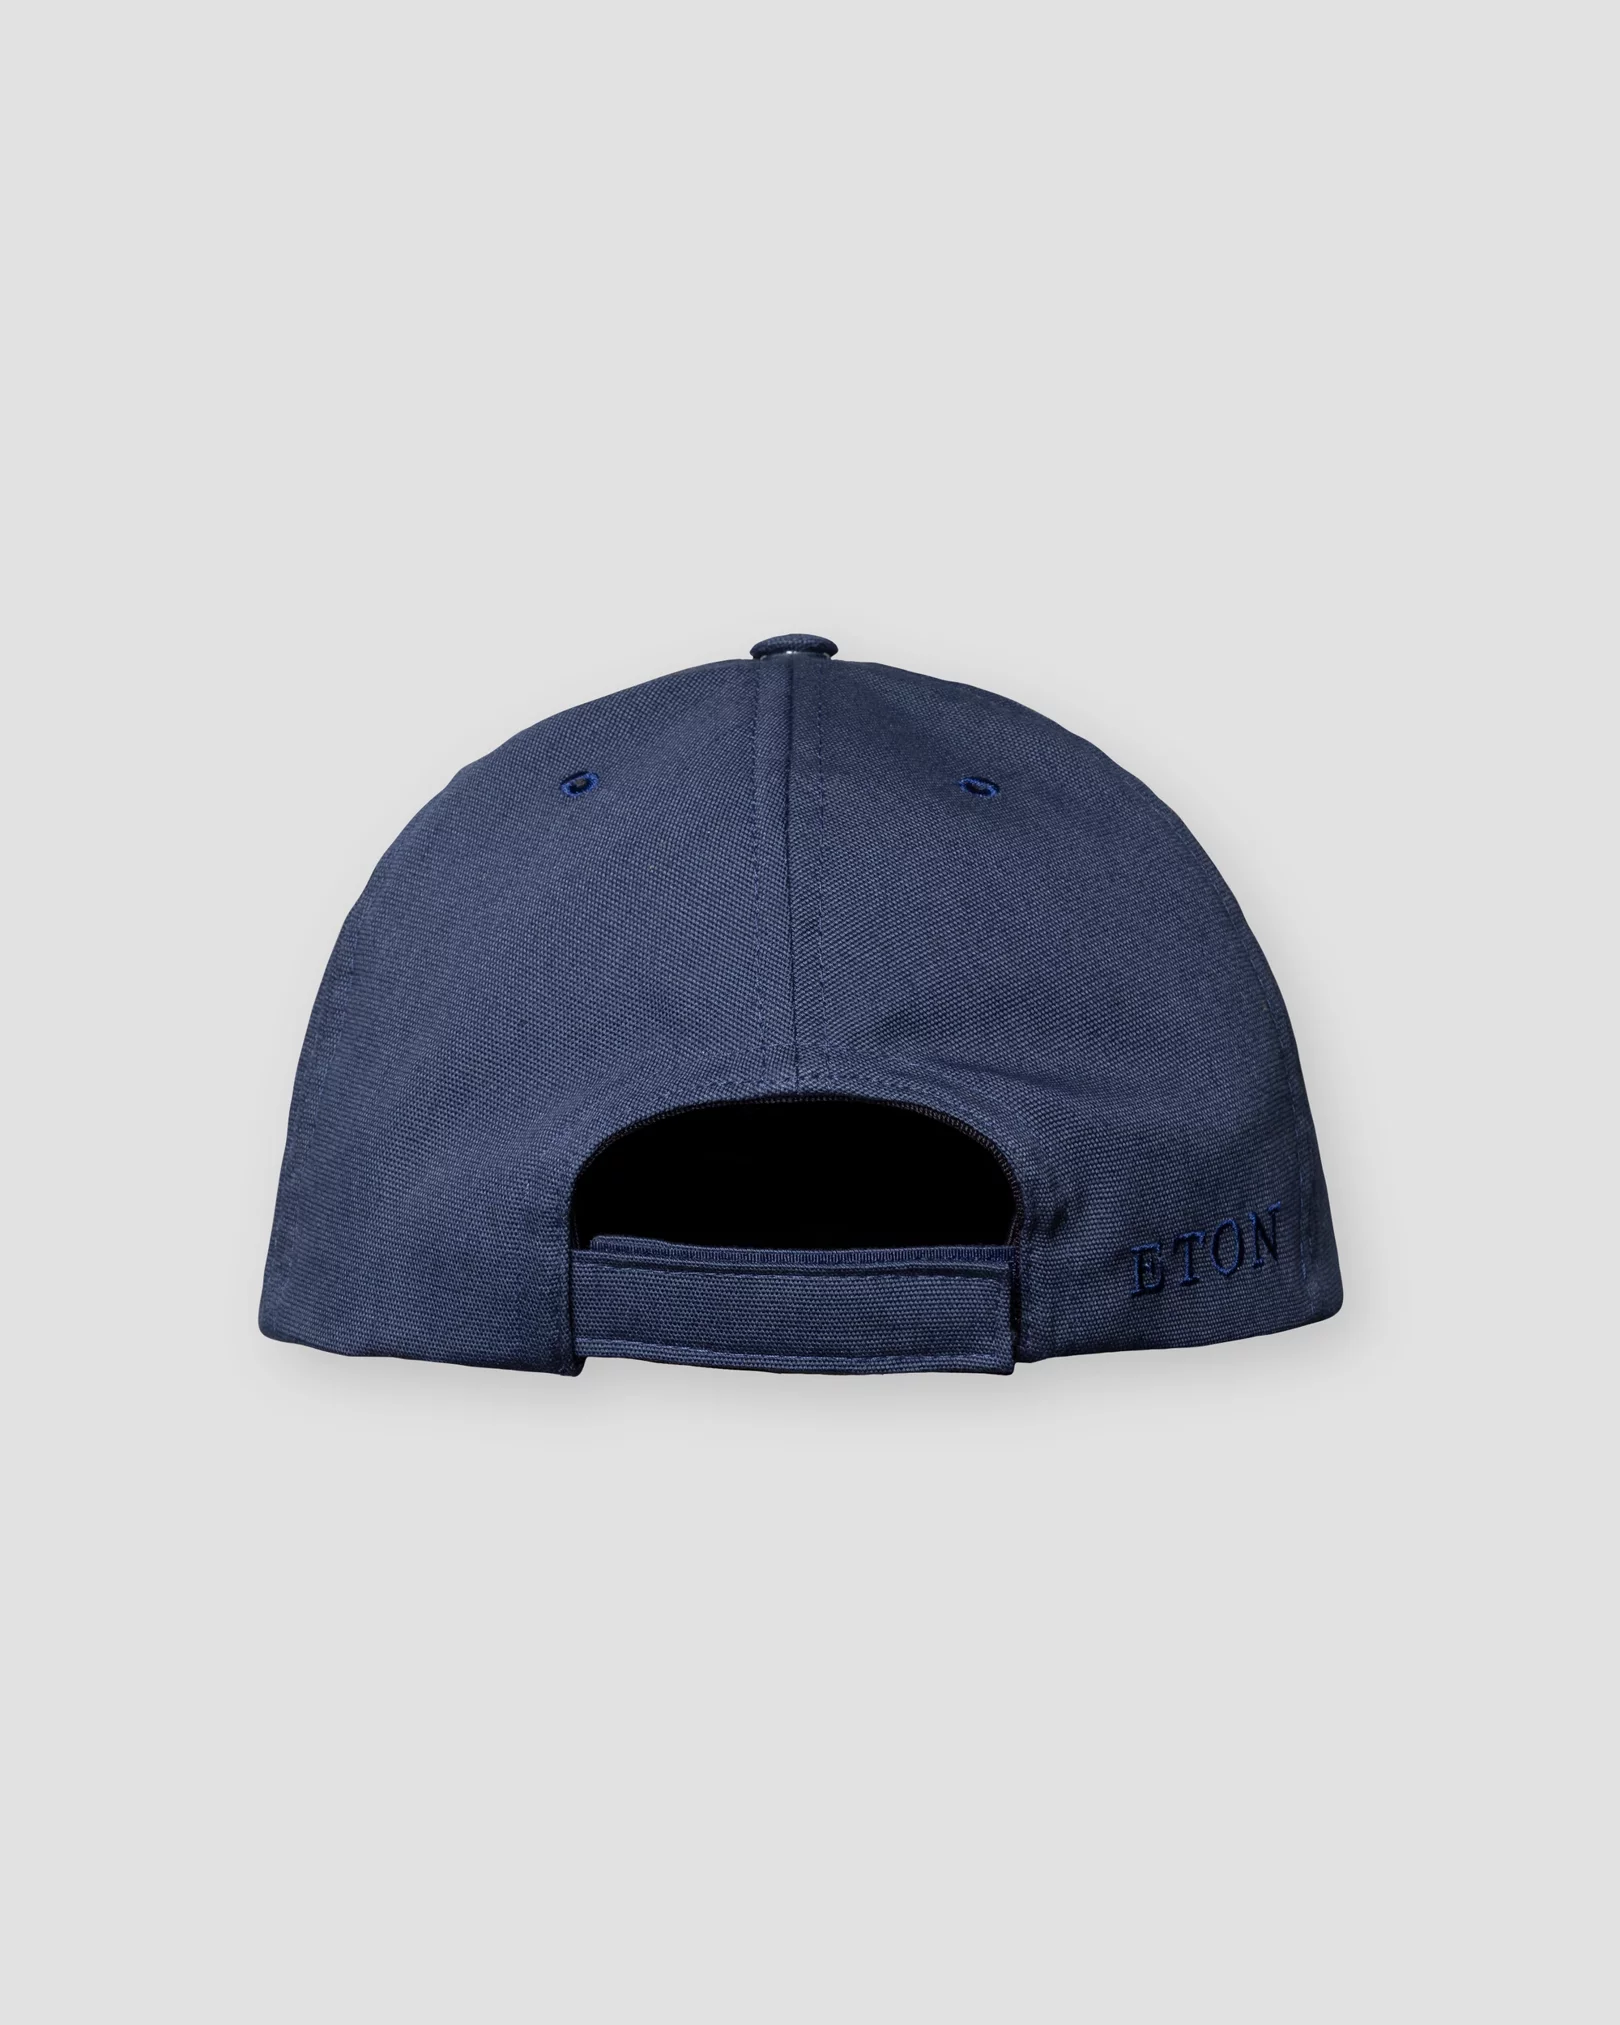 Eton - navy blue cotton baseball cap